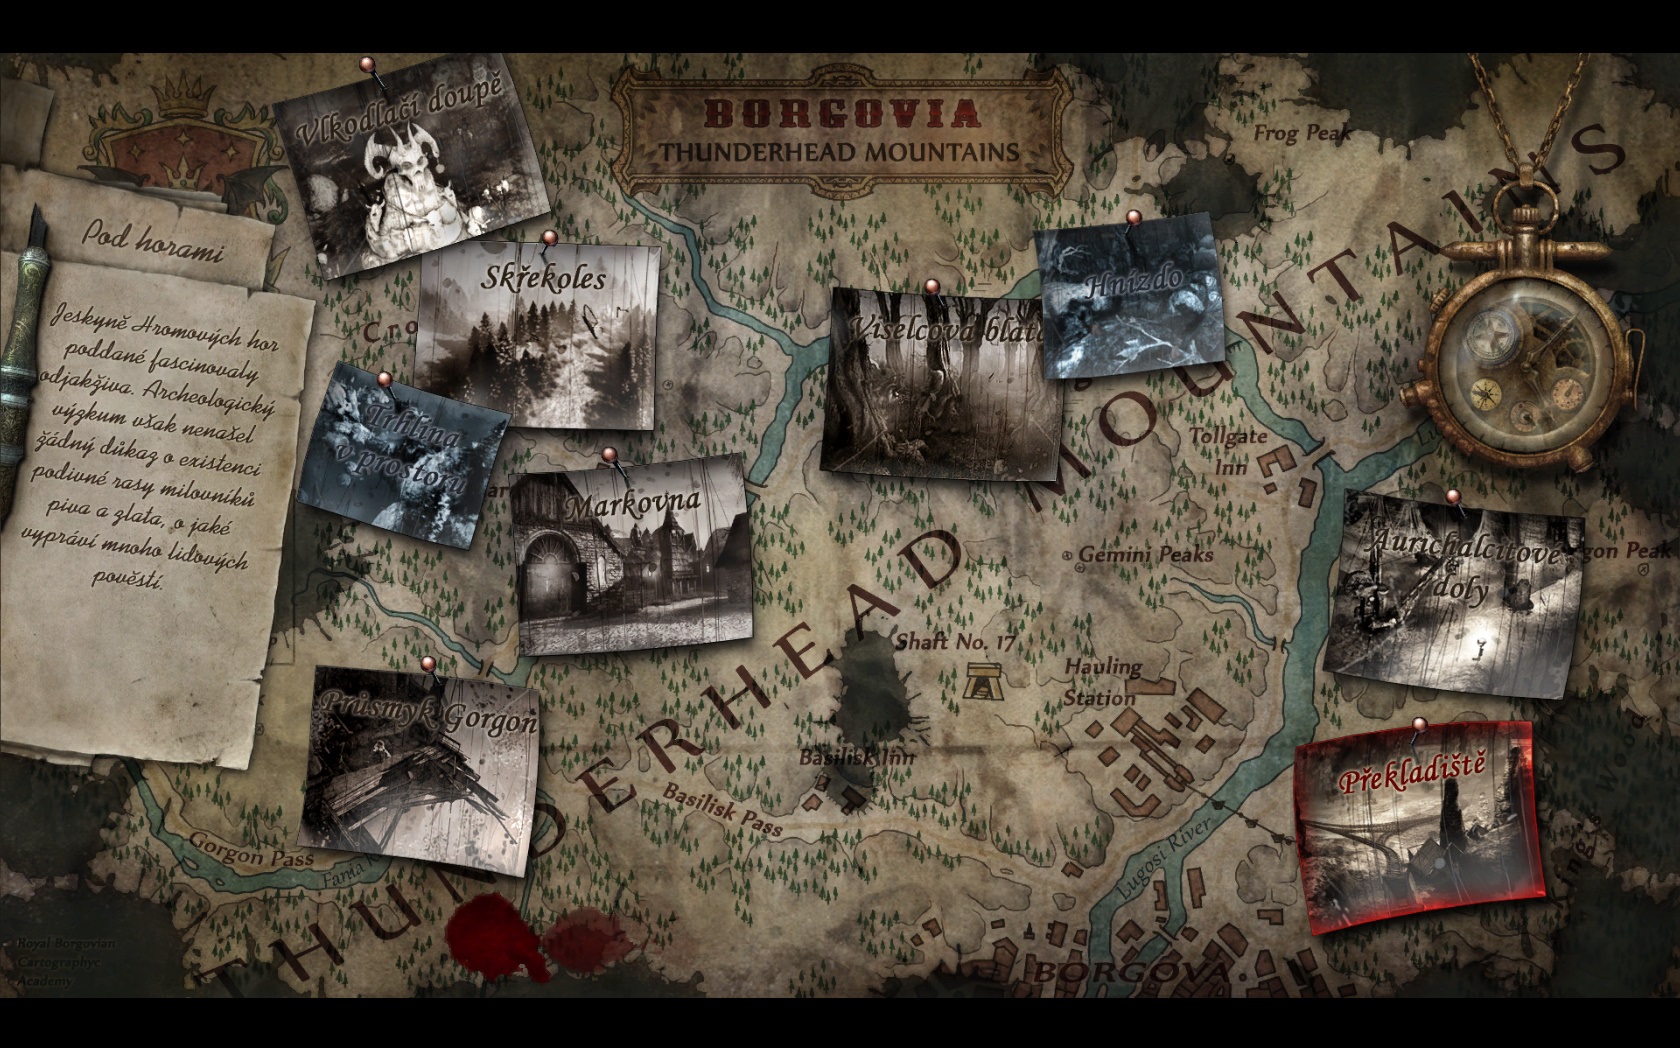 Adventures of Van Helsing - Complete Kdesi v Borgovii...